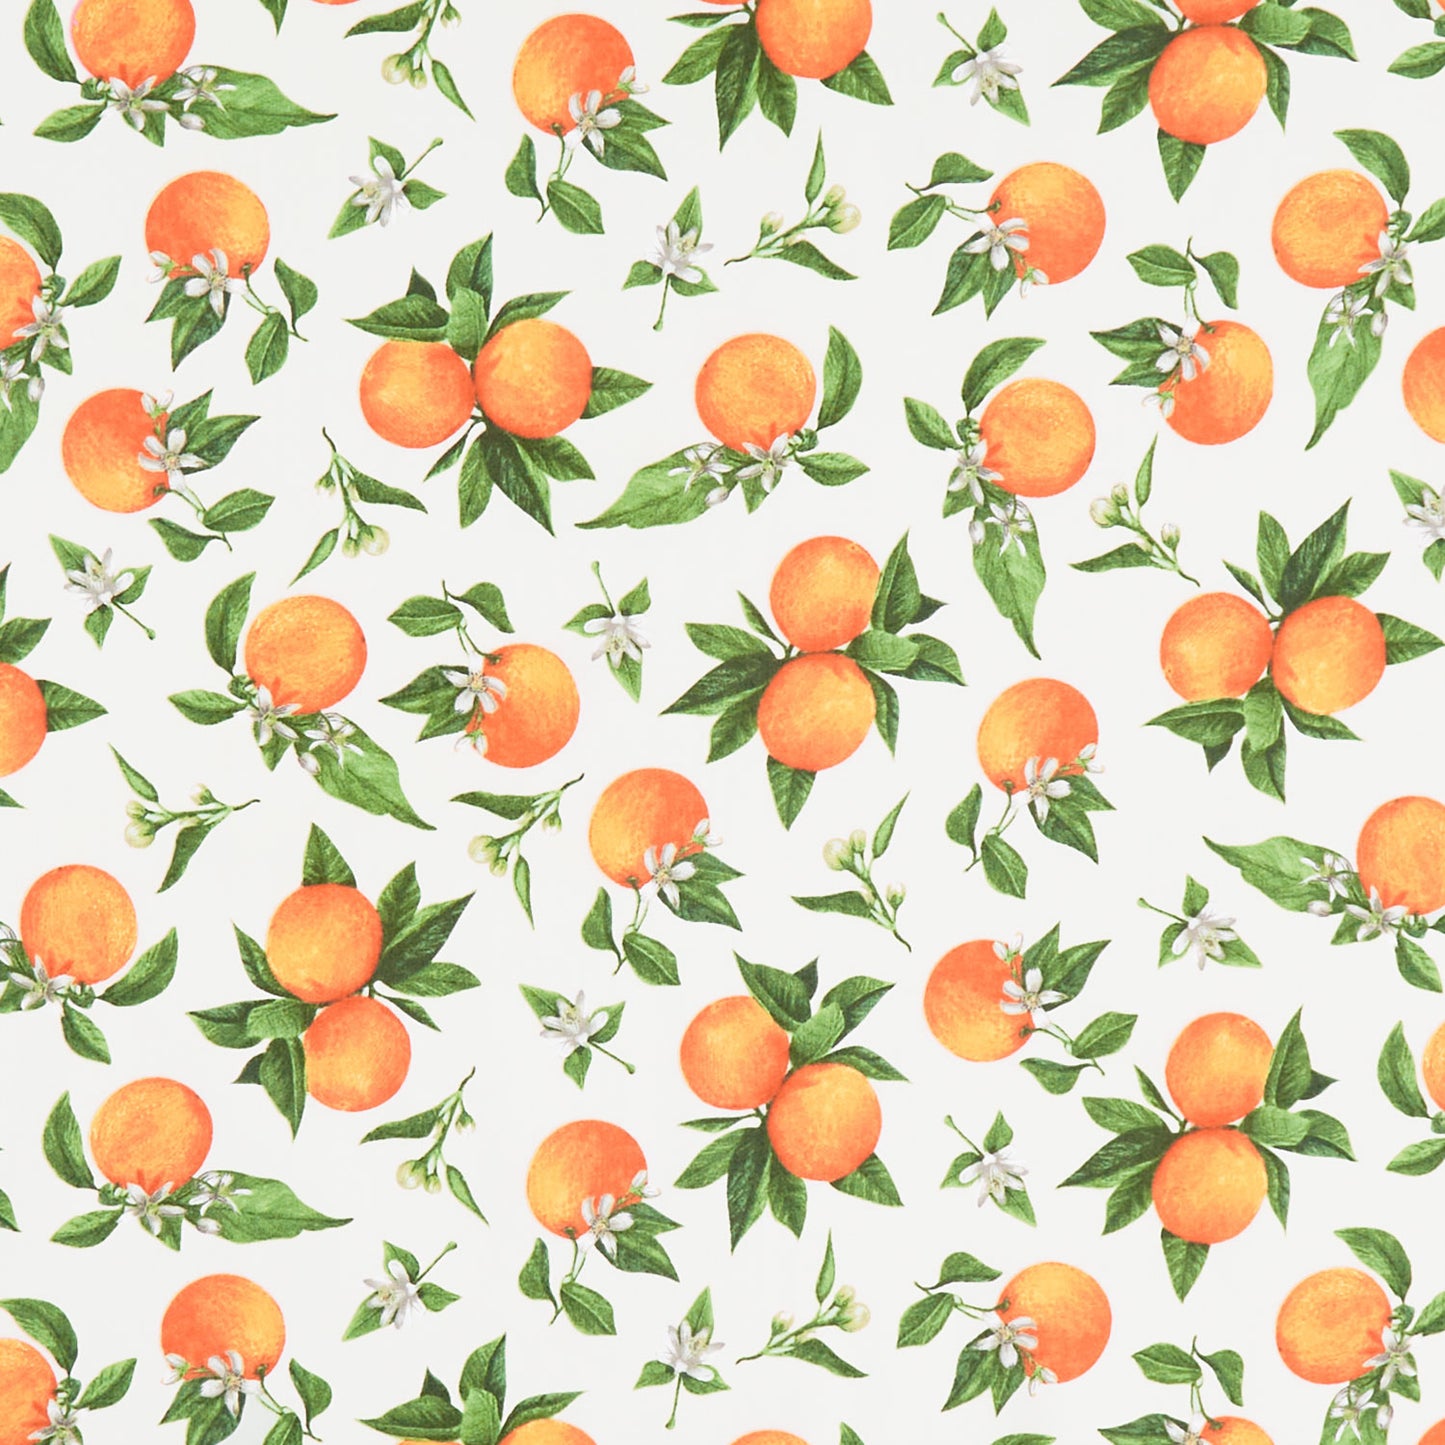 Monthly Placemat Coordinate - Oranges Cream Yardage Primary Image